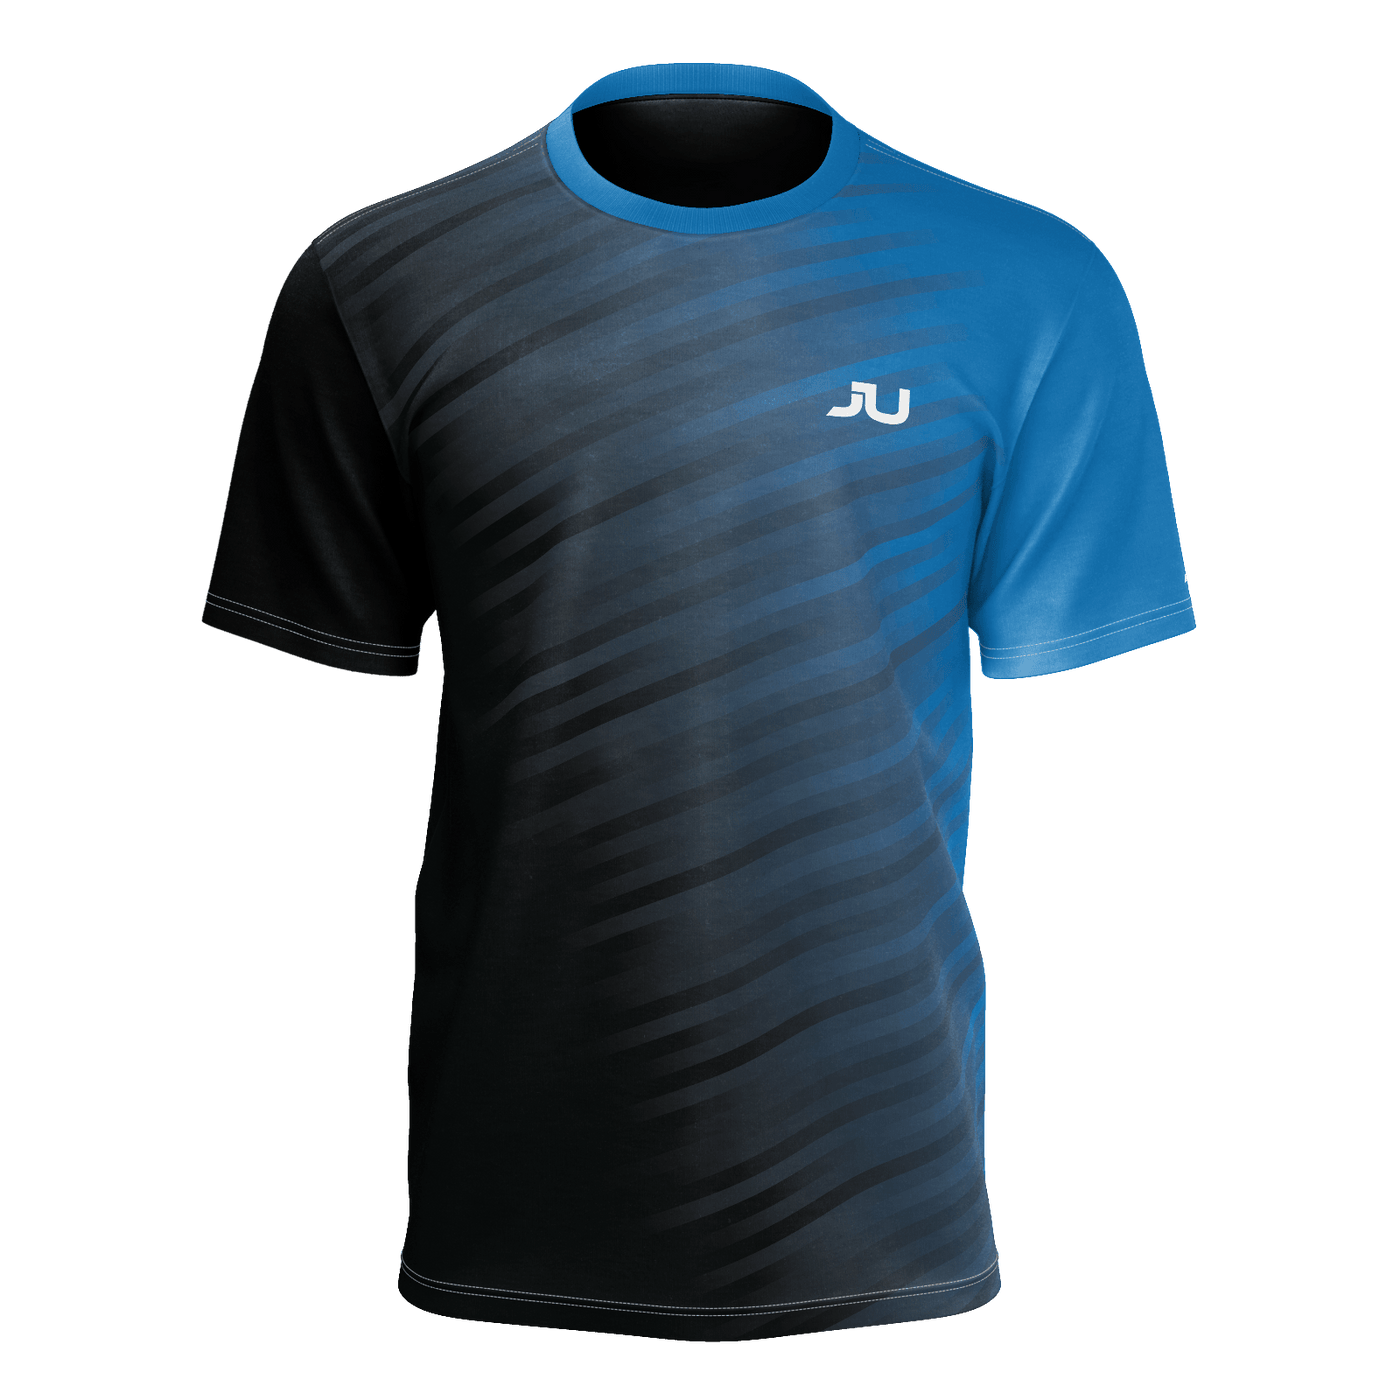 CrossFade Team Tee Shirts